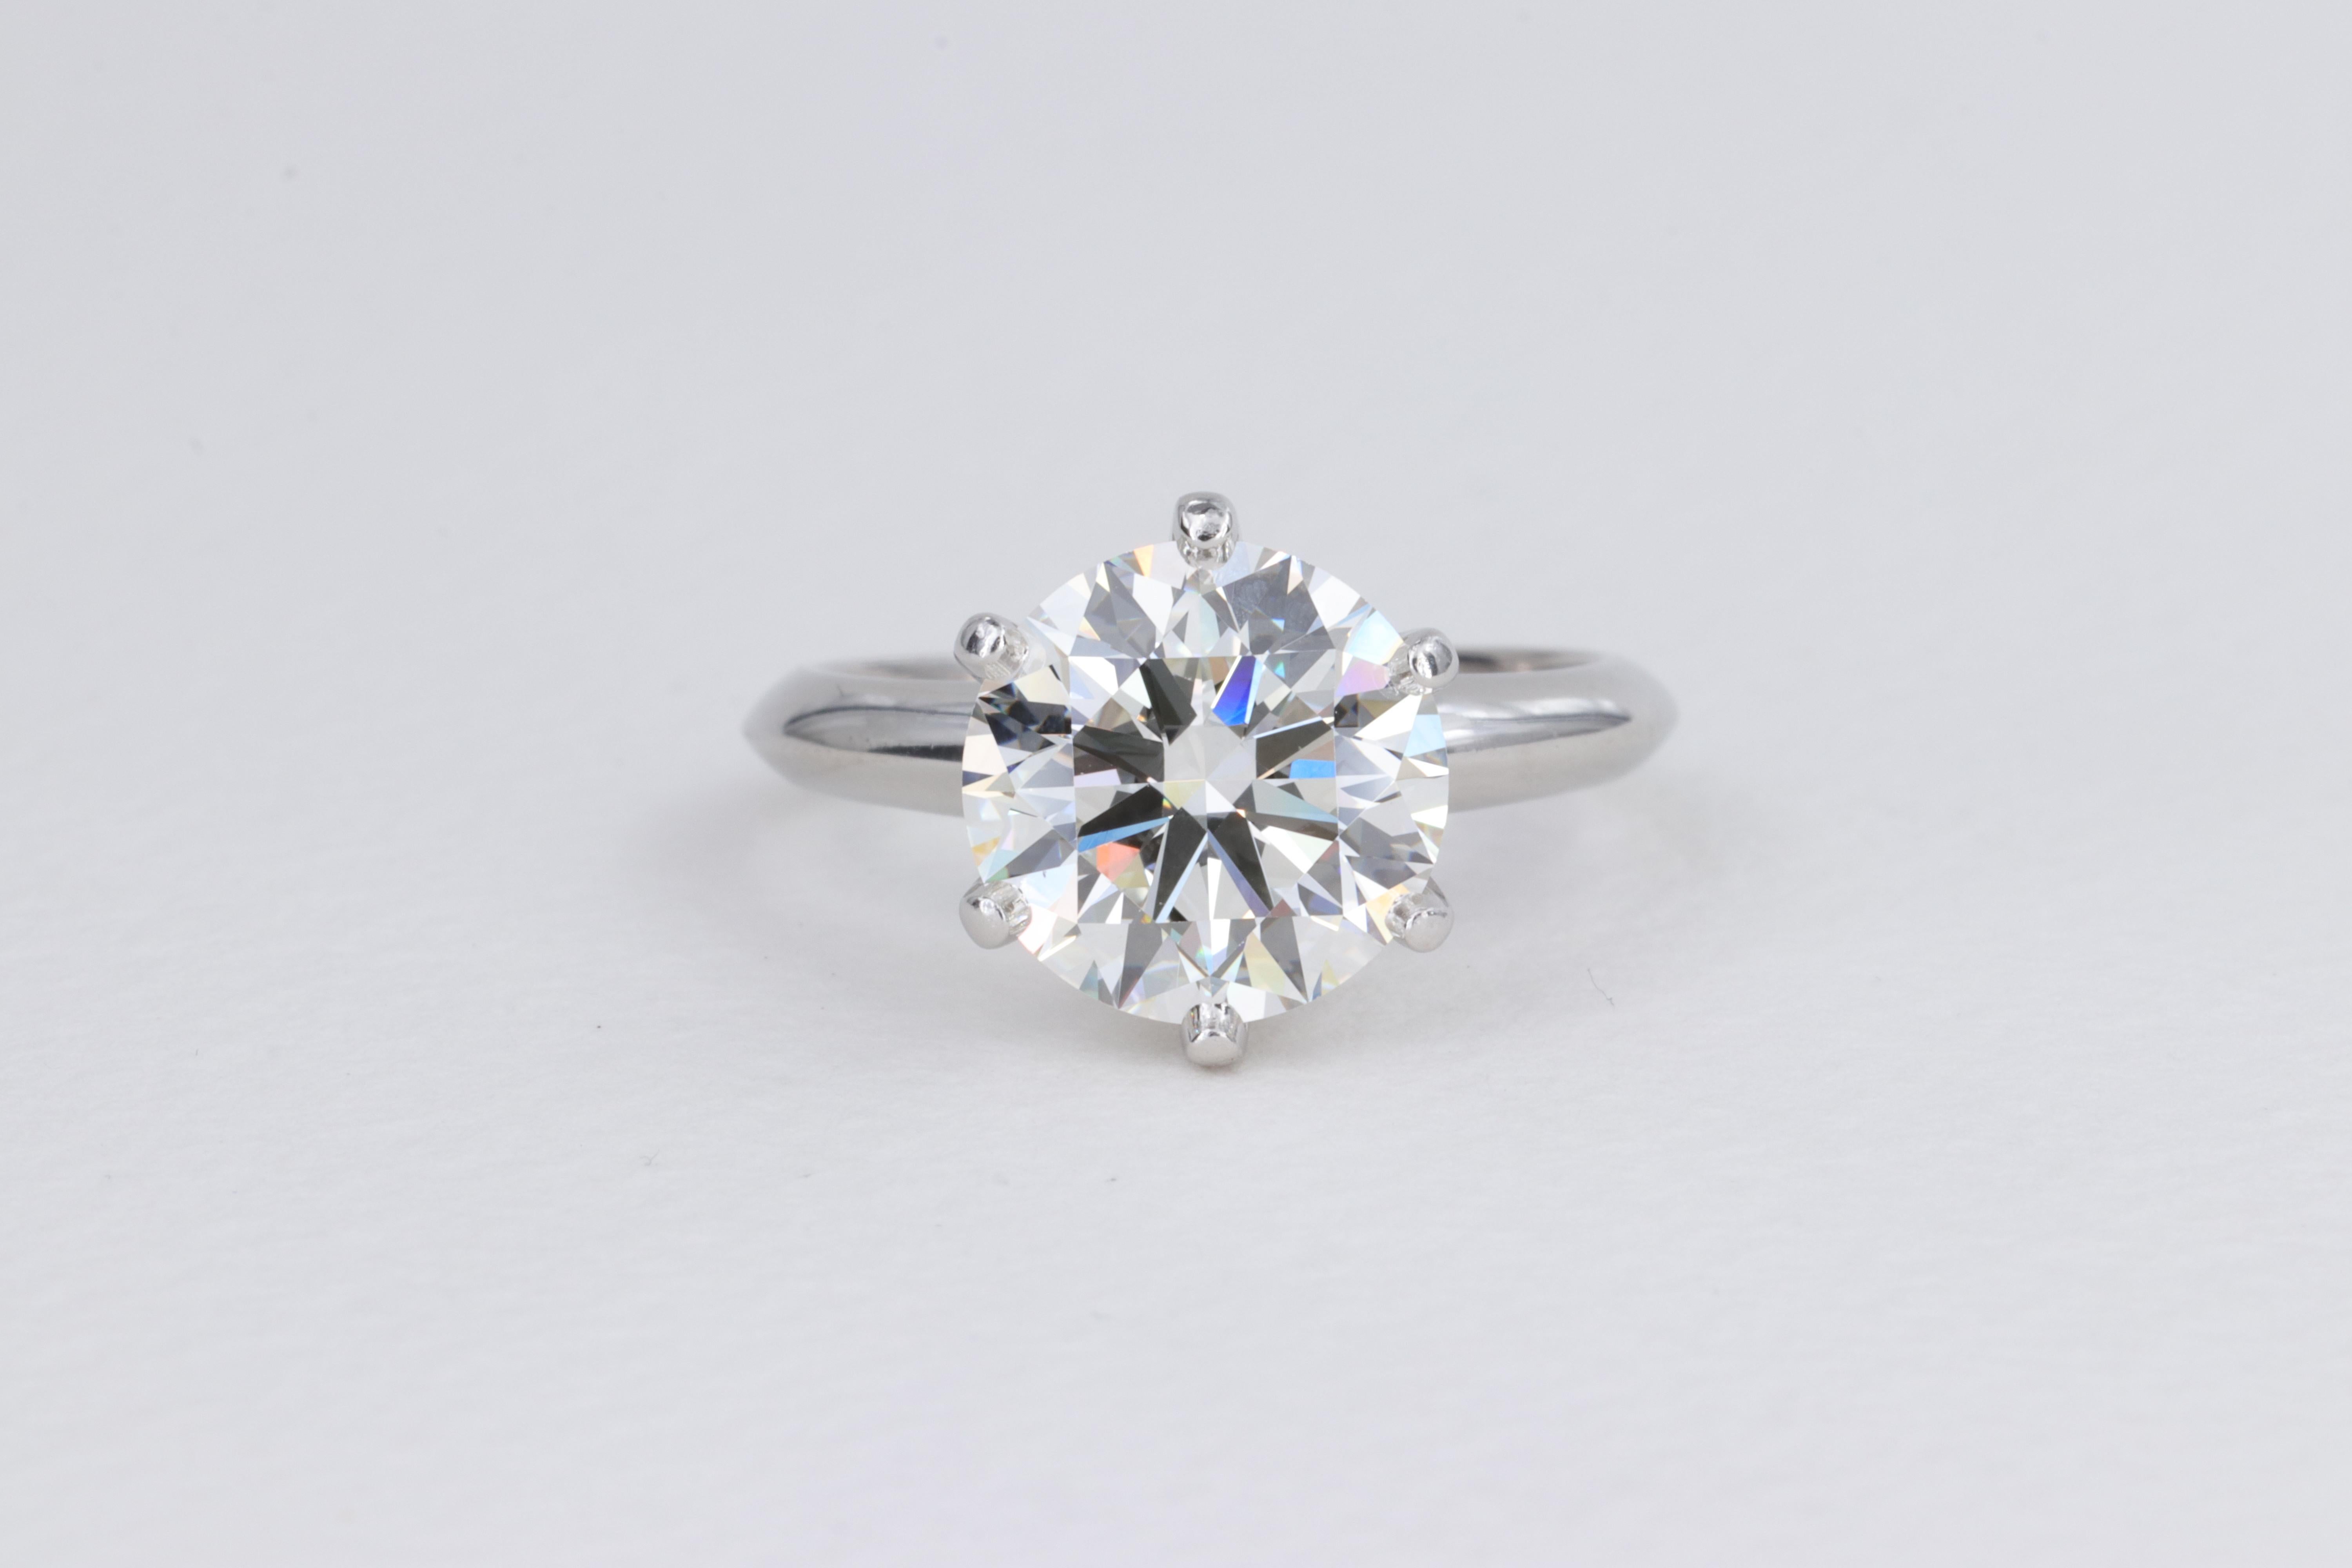 4 carat diamond ring price tiffany